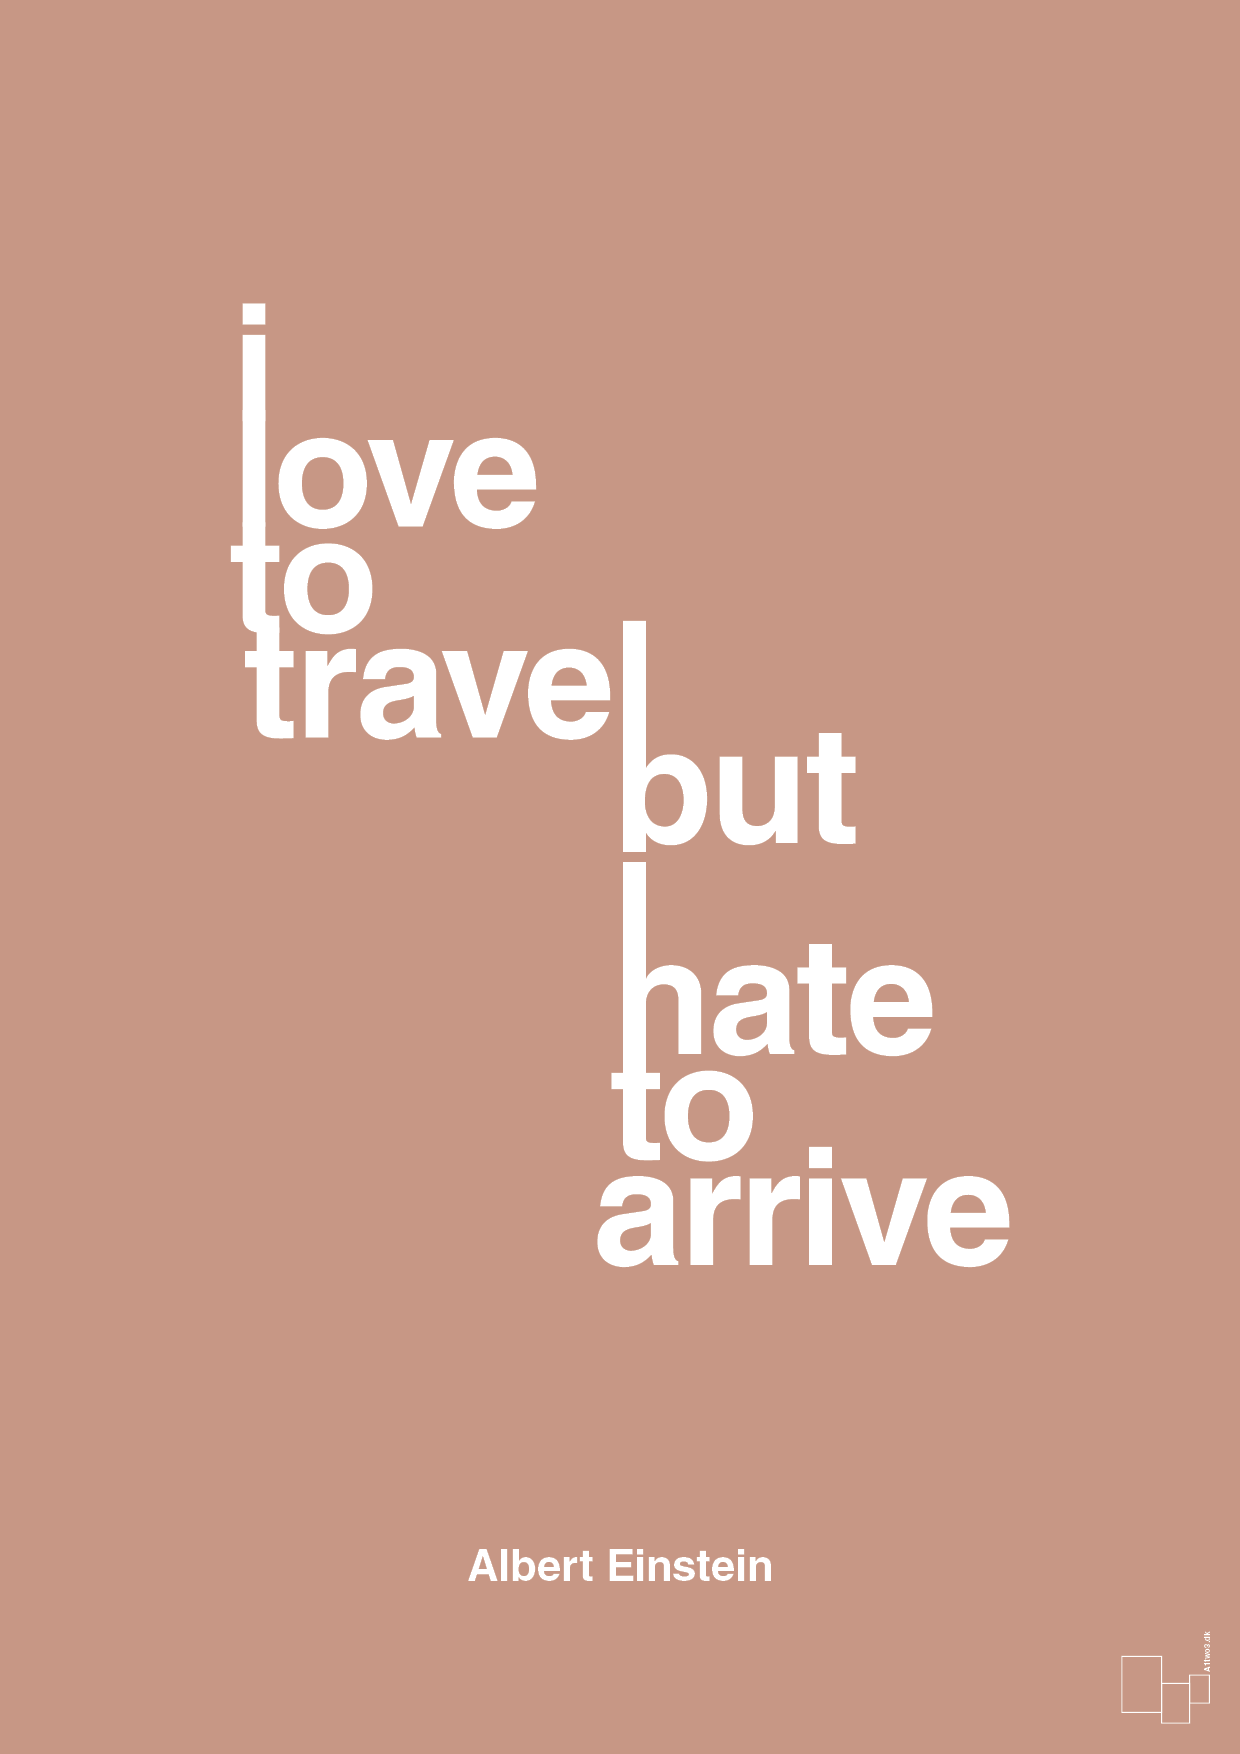 i love to travel but hate to arrive - Plakat med Citater i Powder